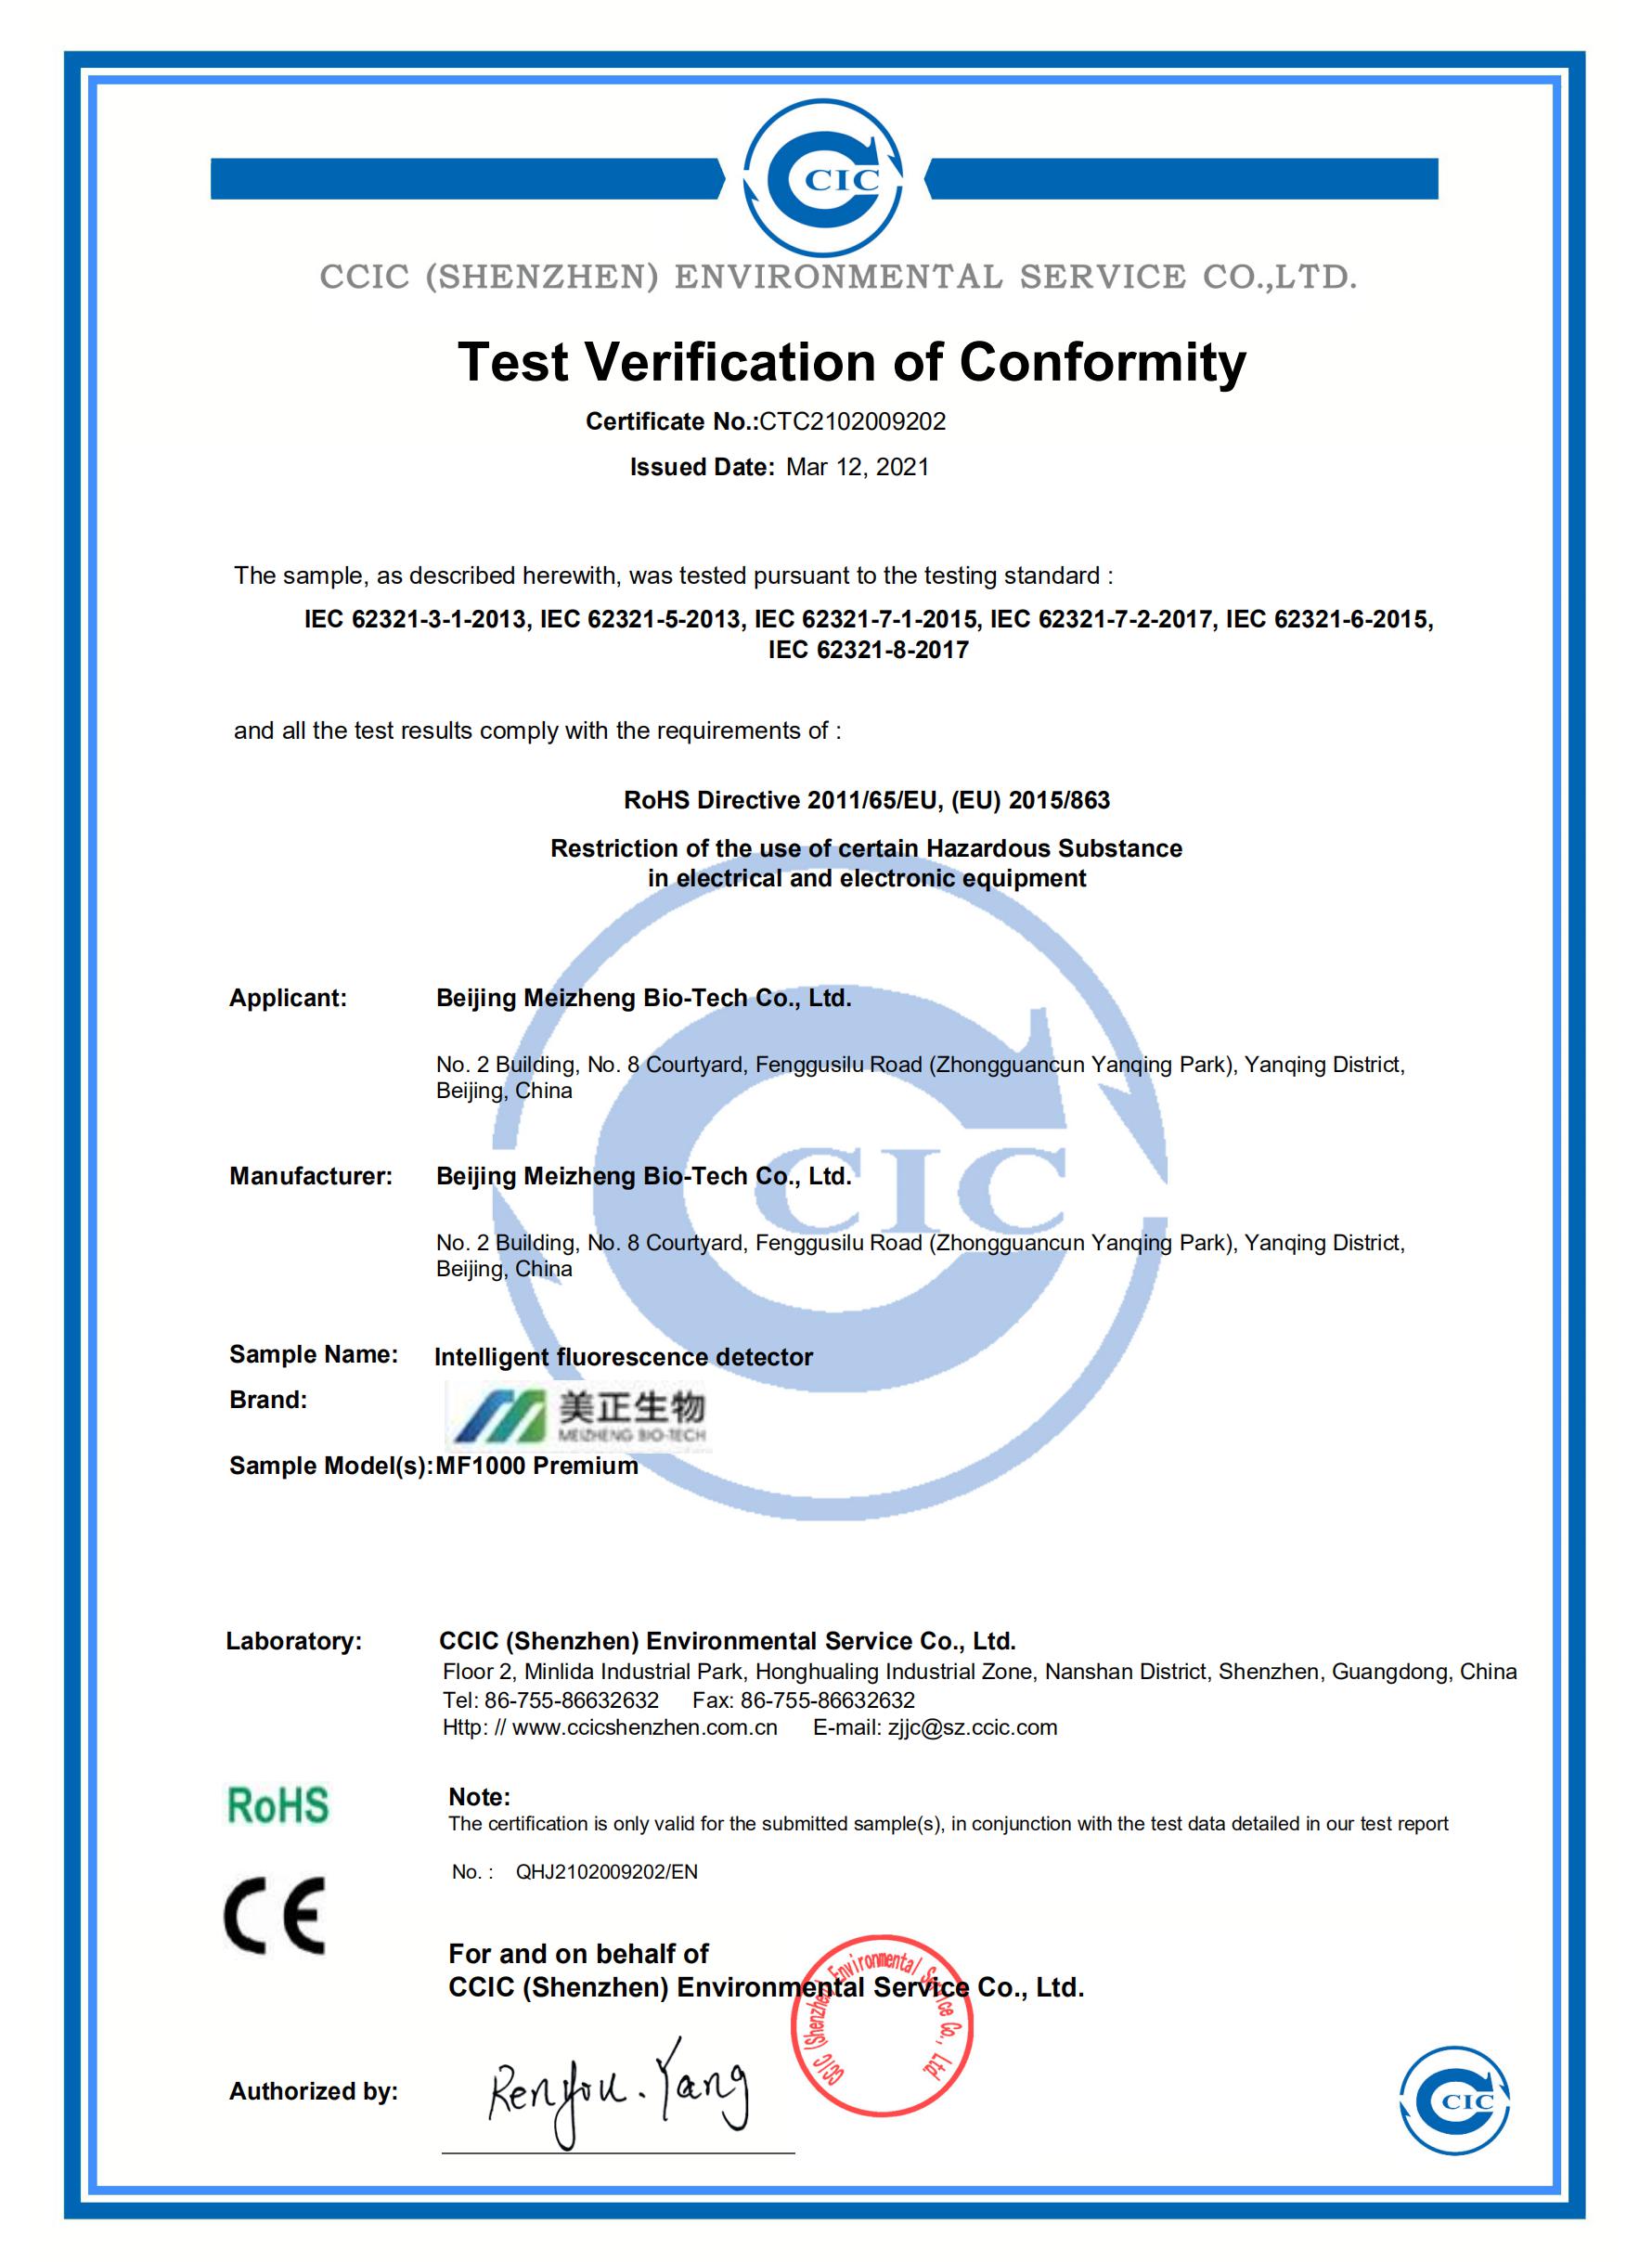 CE Certification of PureTrust™ Intelligent Fluorescence Detector MF1000Premium